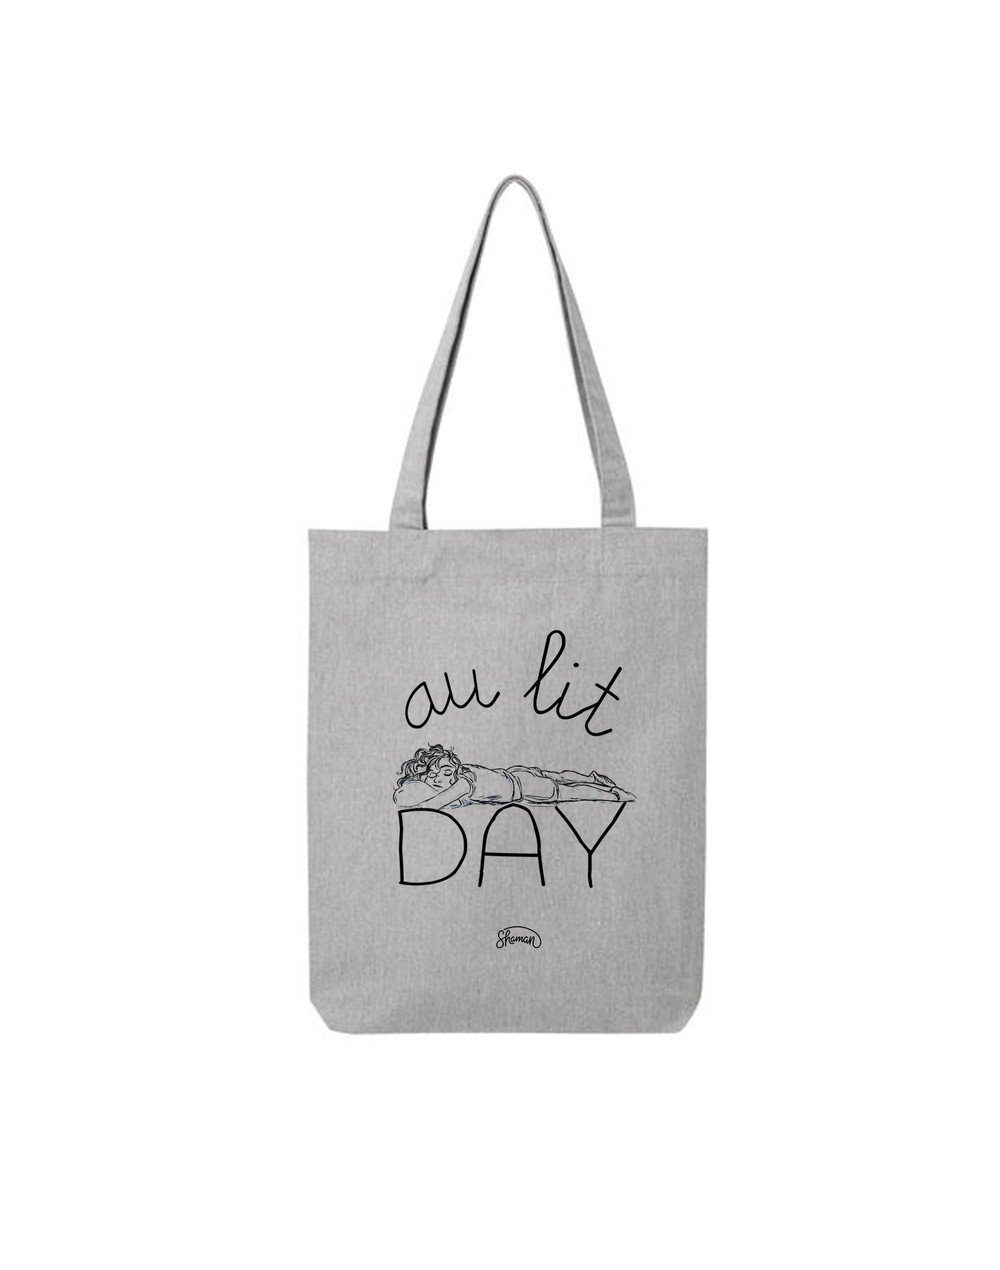 Tote Bag "Au lit day"